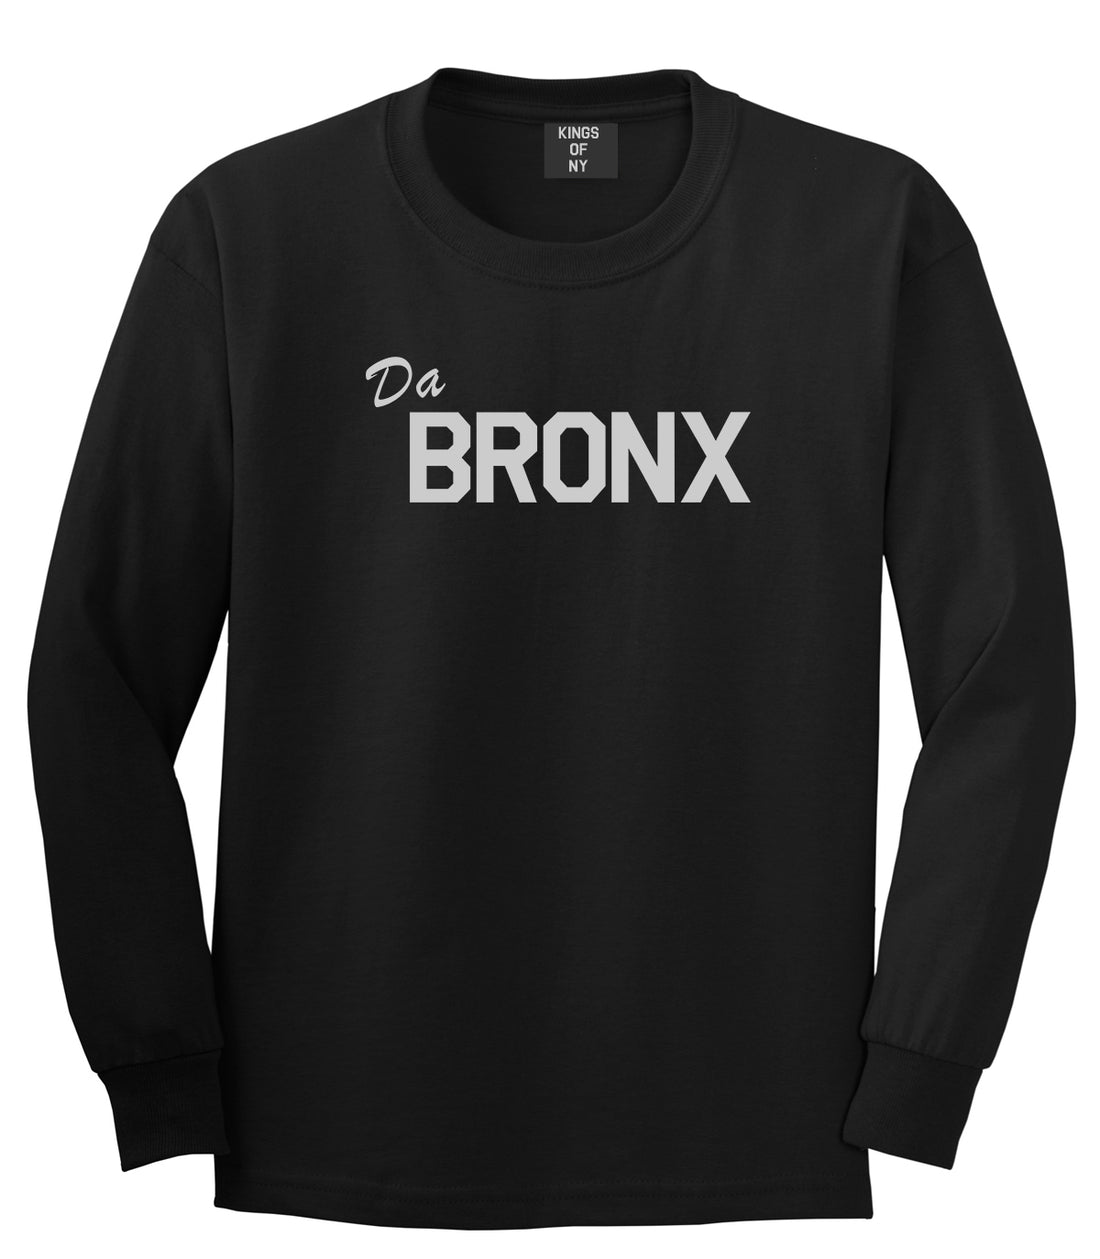 Da Bronx Mens Long Sleeve T-Shirt Black by Kings Of NY